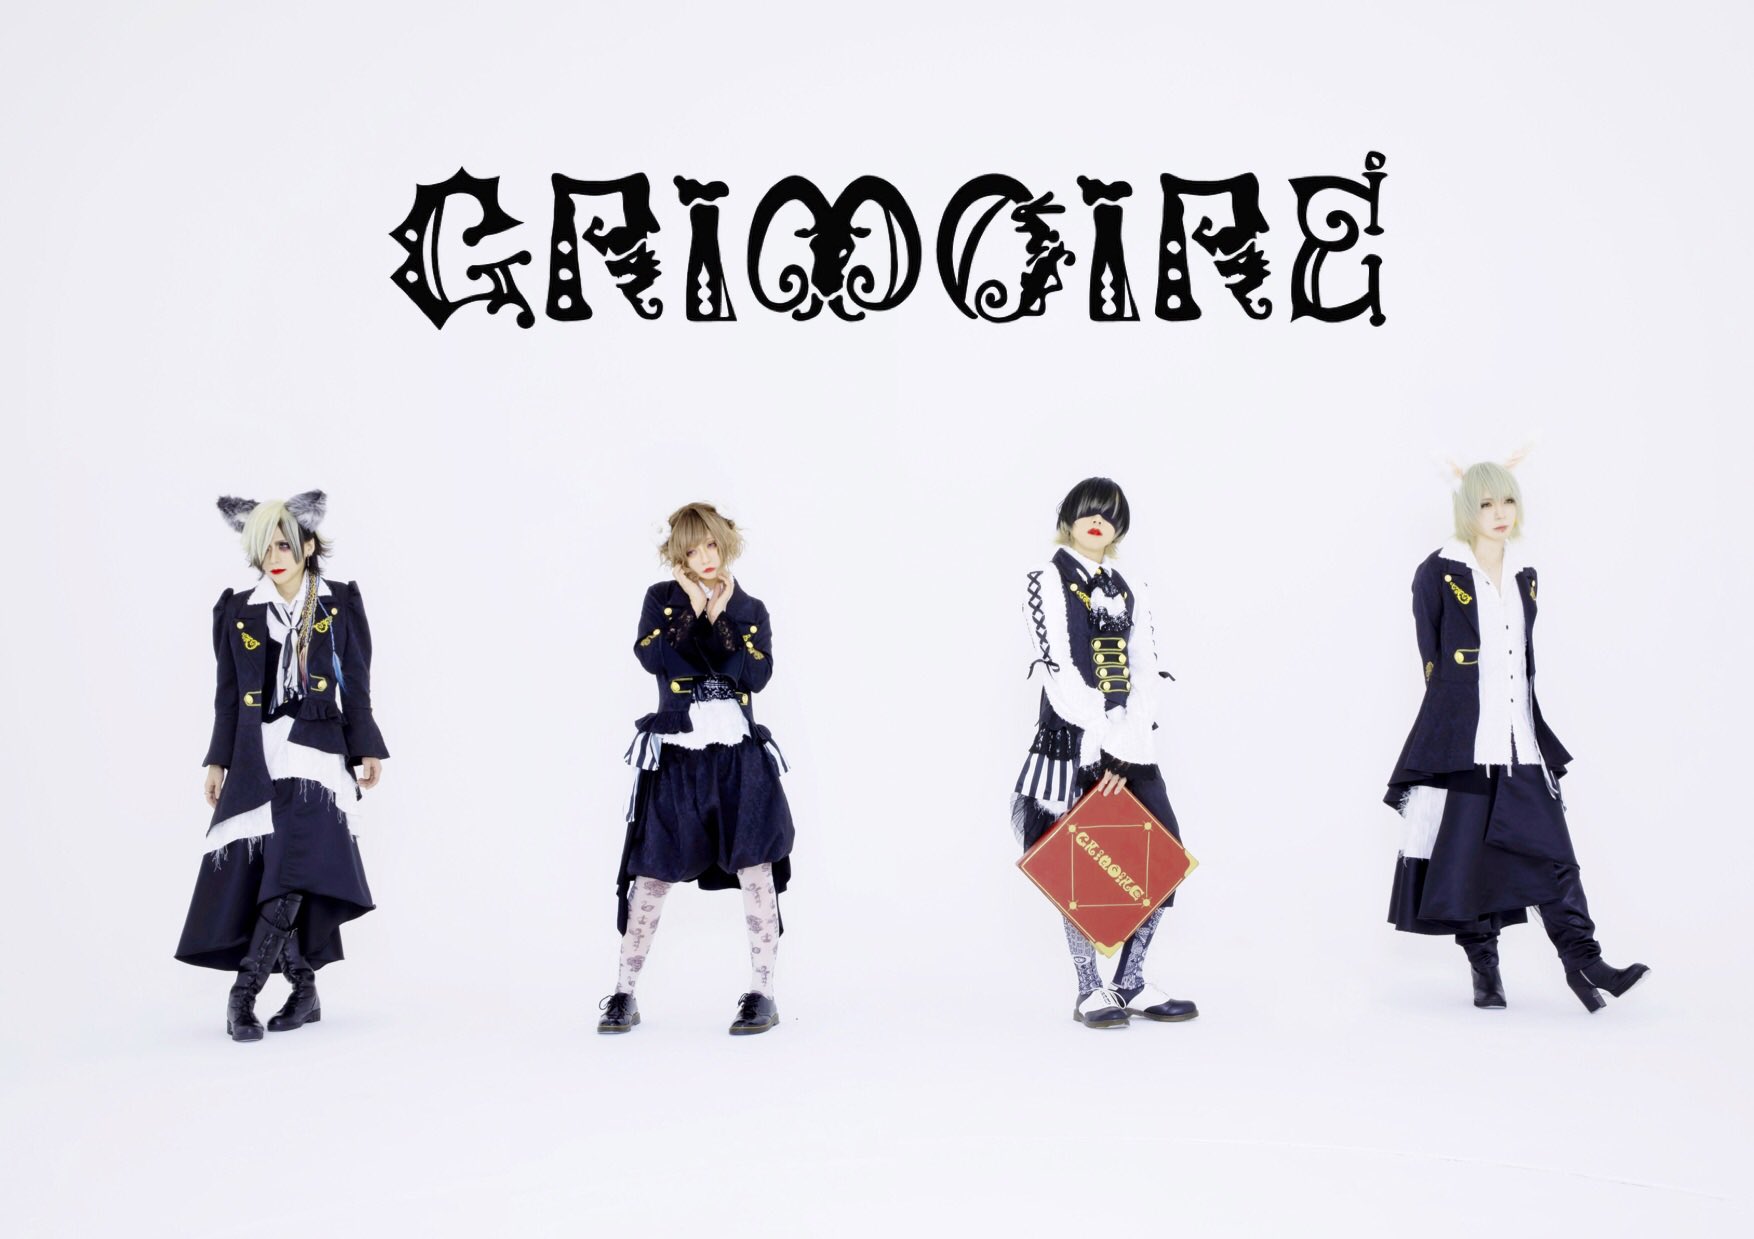 GRIMOIRE – “Quintet” mini album digest and new MV “Traumerei”